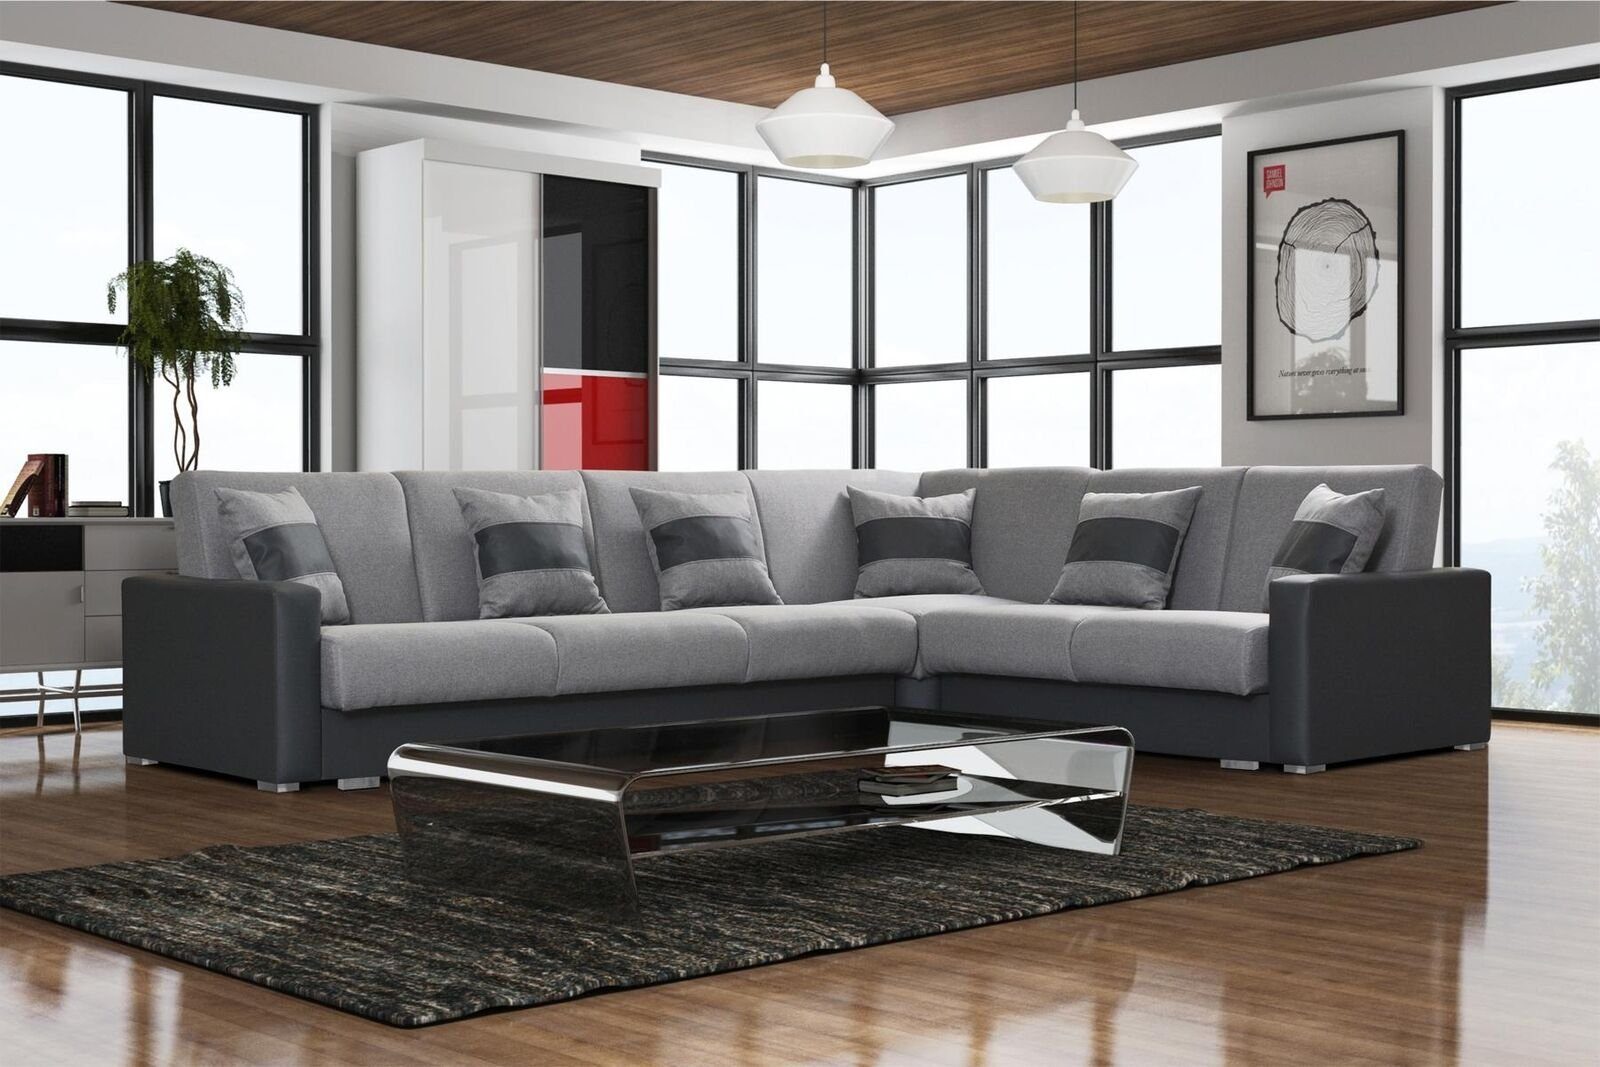 JVmoebel Ecksofa, Design Couch Lounge Sofas Textil Neu Sofa L-form Sofa Wohnlandschaft Grau/Schwarz